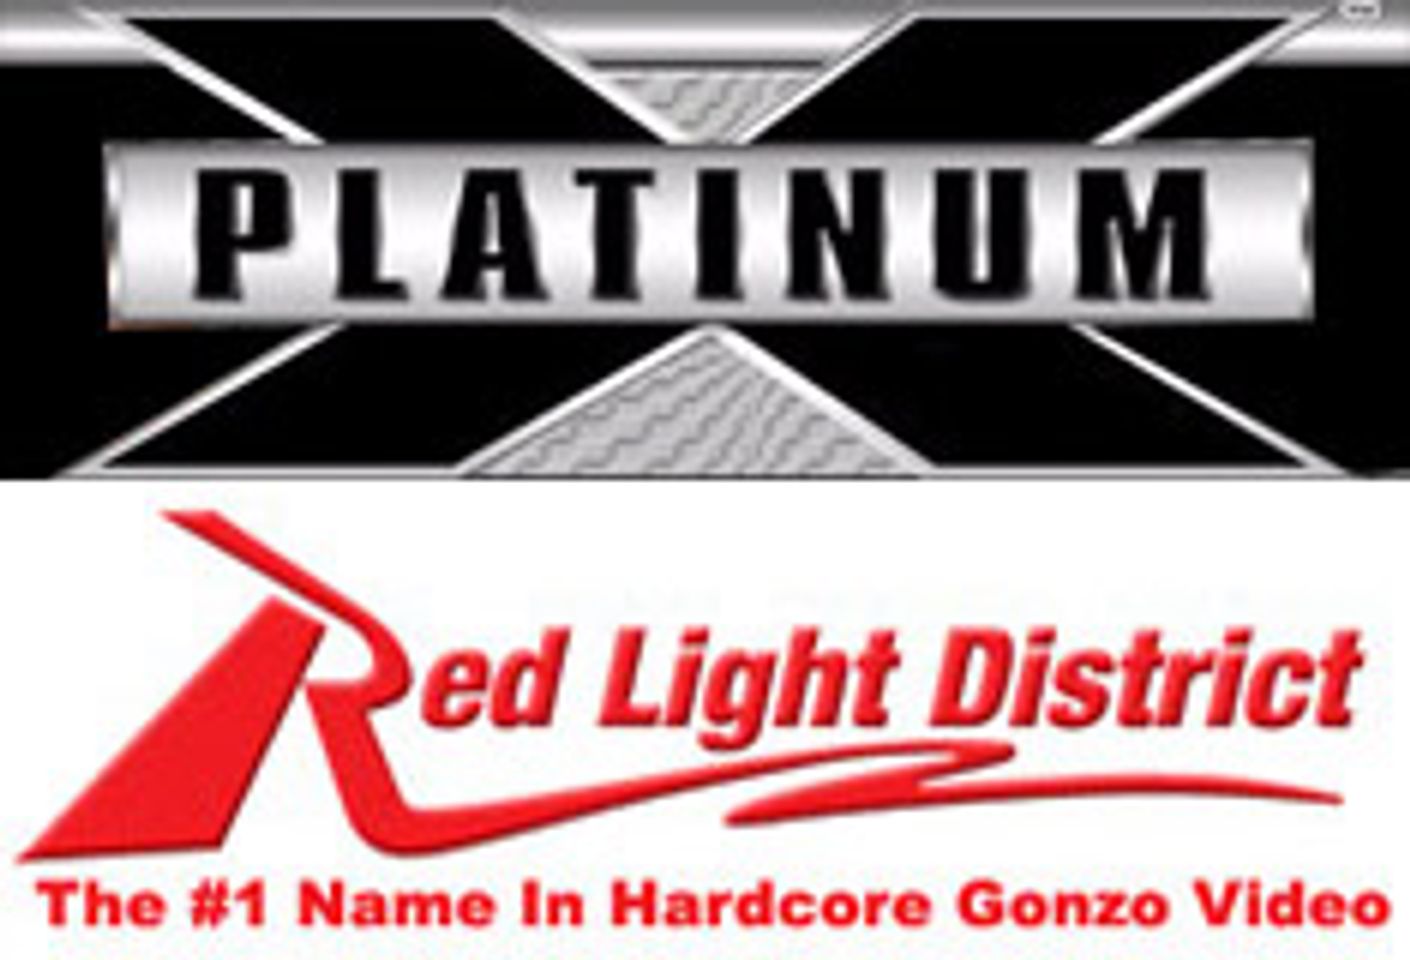 Red Light District, Platinum X Together Under One Big Roof